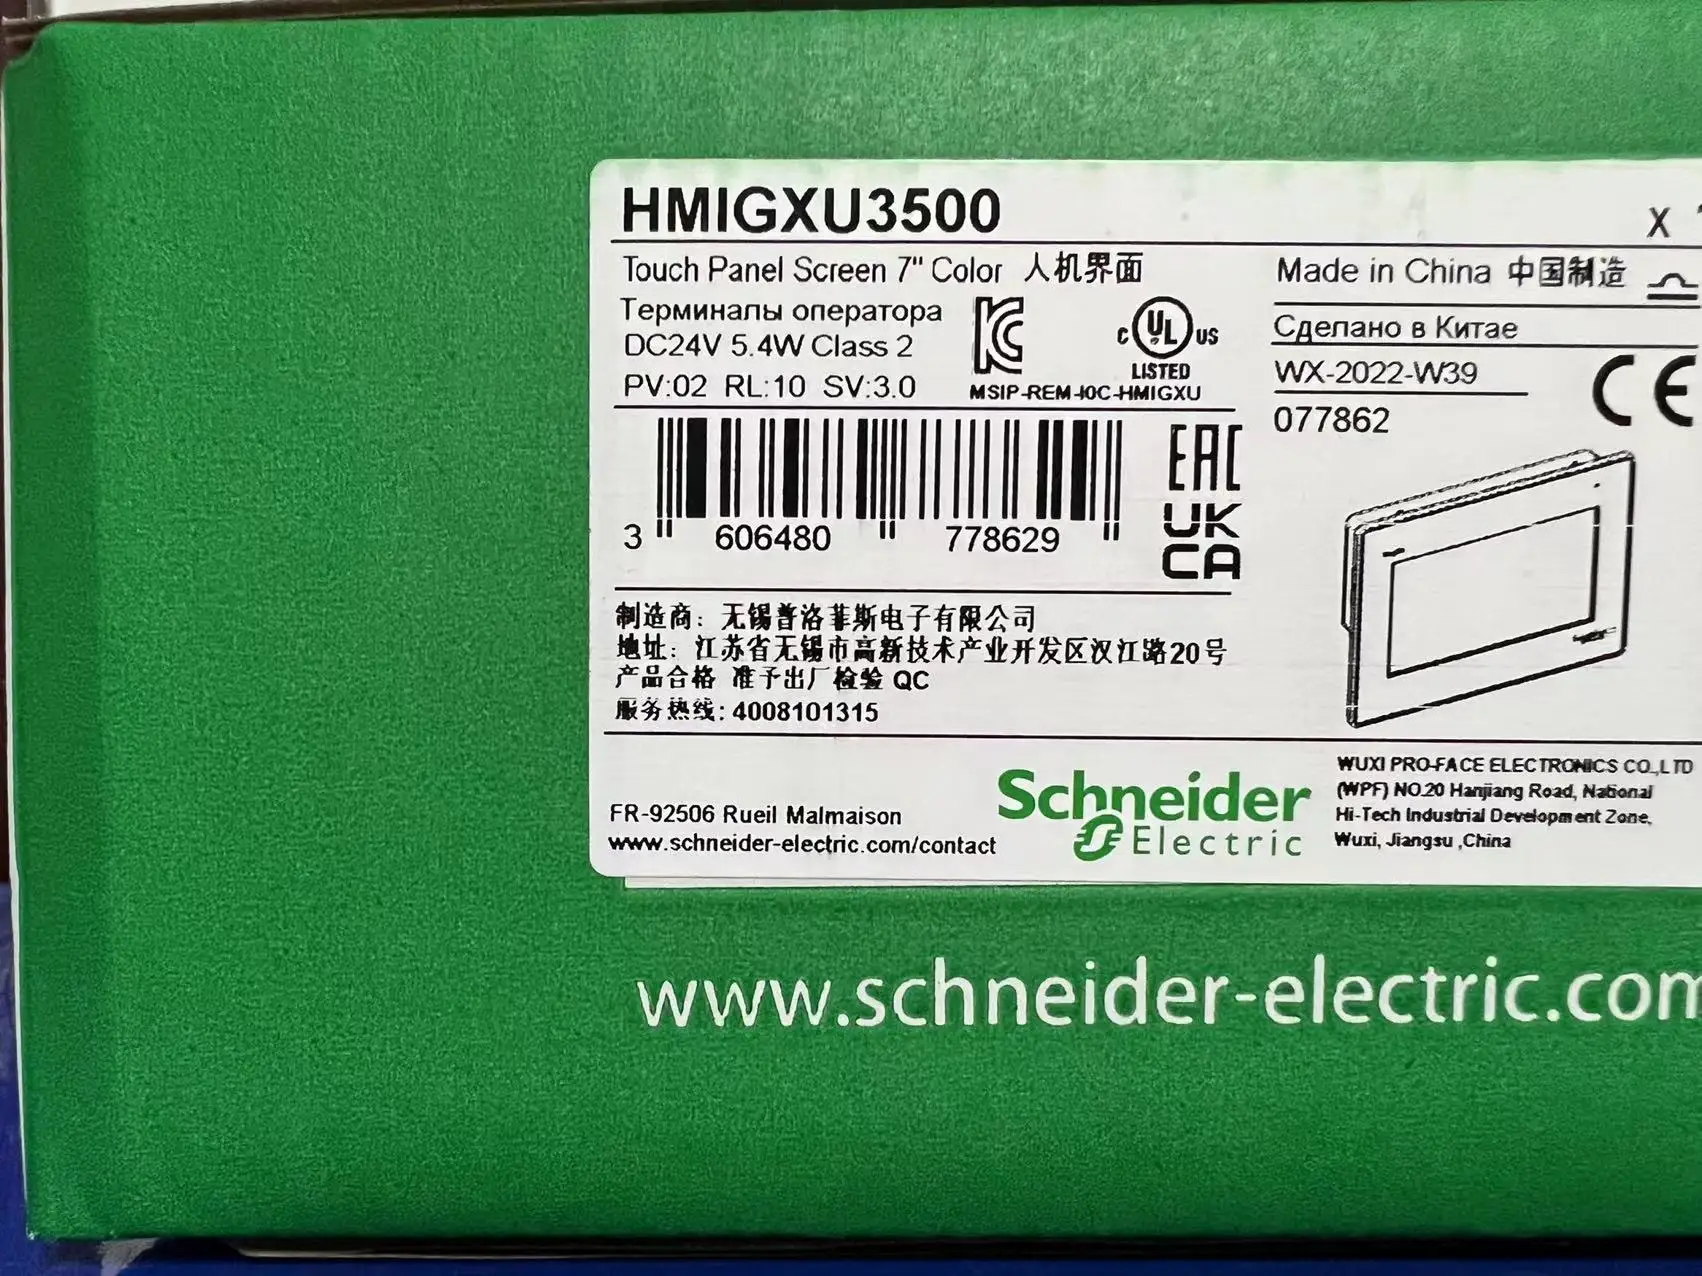 

Schneider Brand New Original Authentic Touch Screen HMIGXU3512